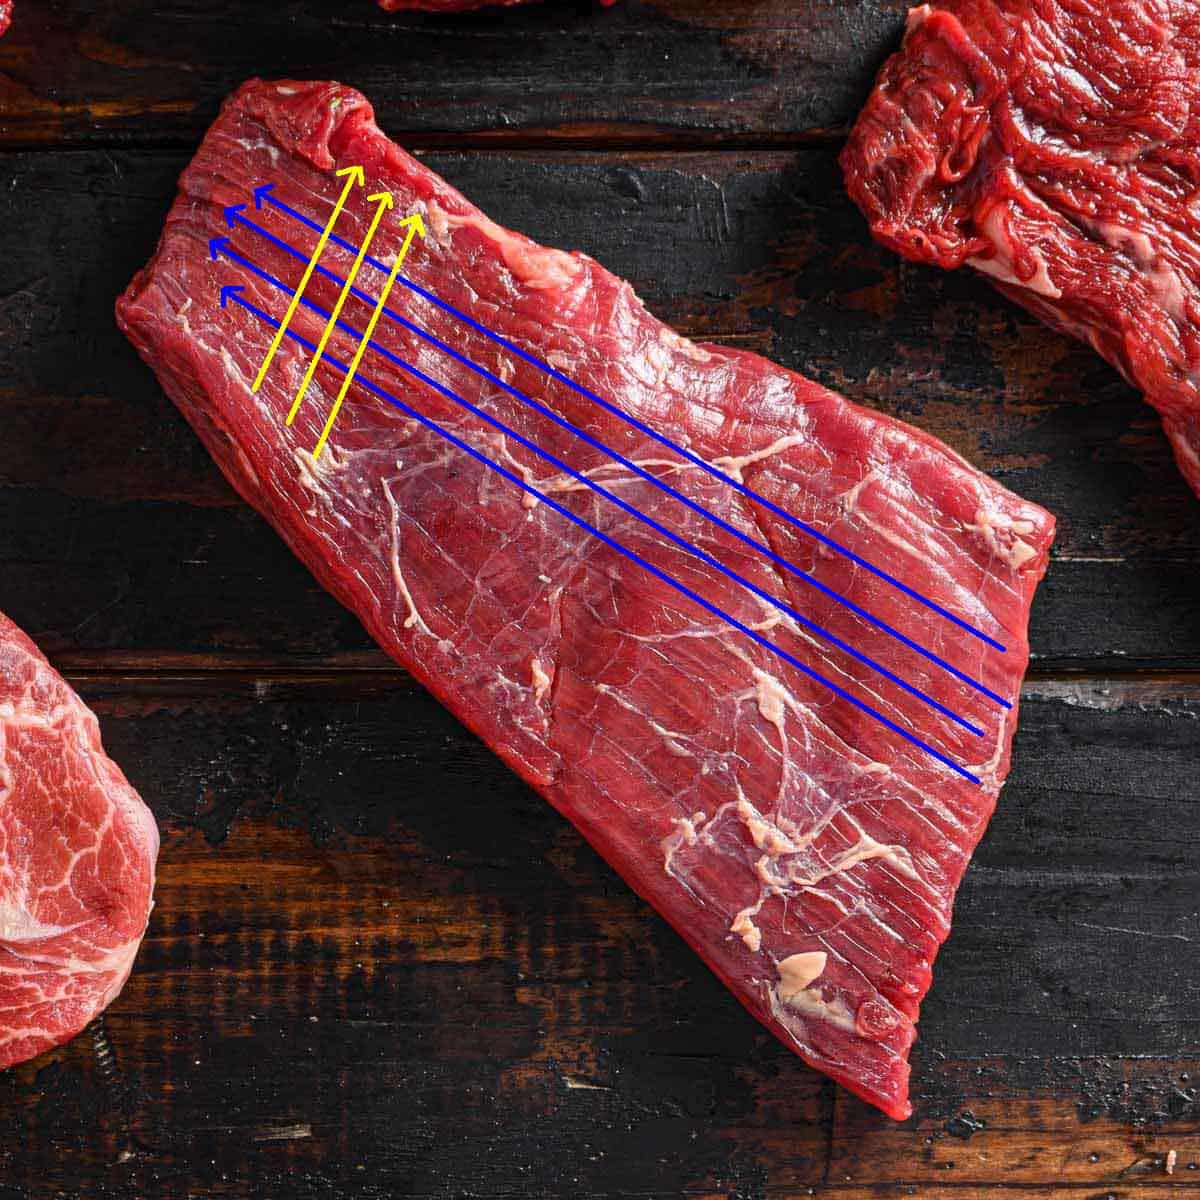 Skirt Steak vs Flap Meat: Choosing the Best Cut for Your Dish